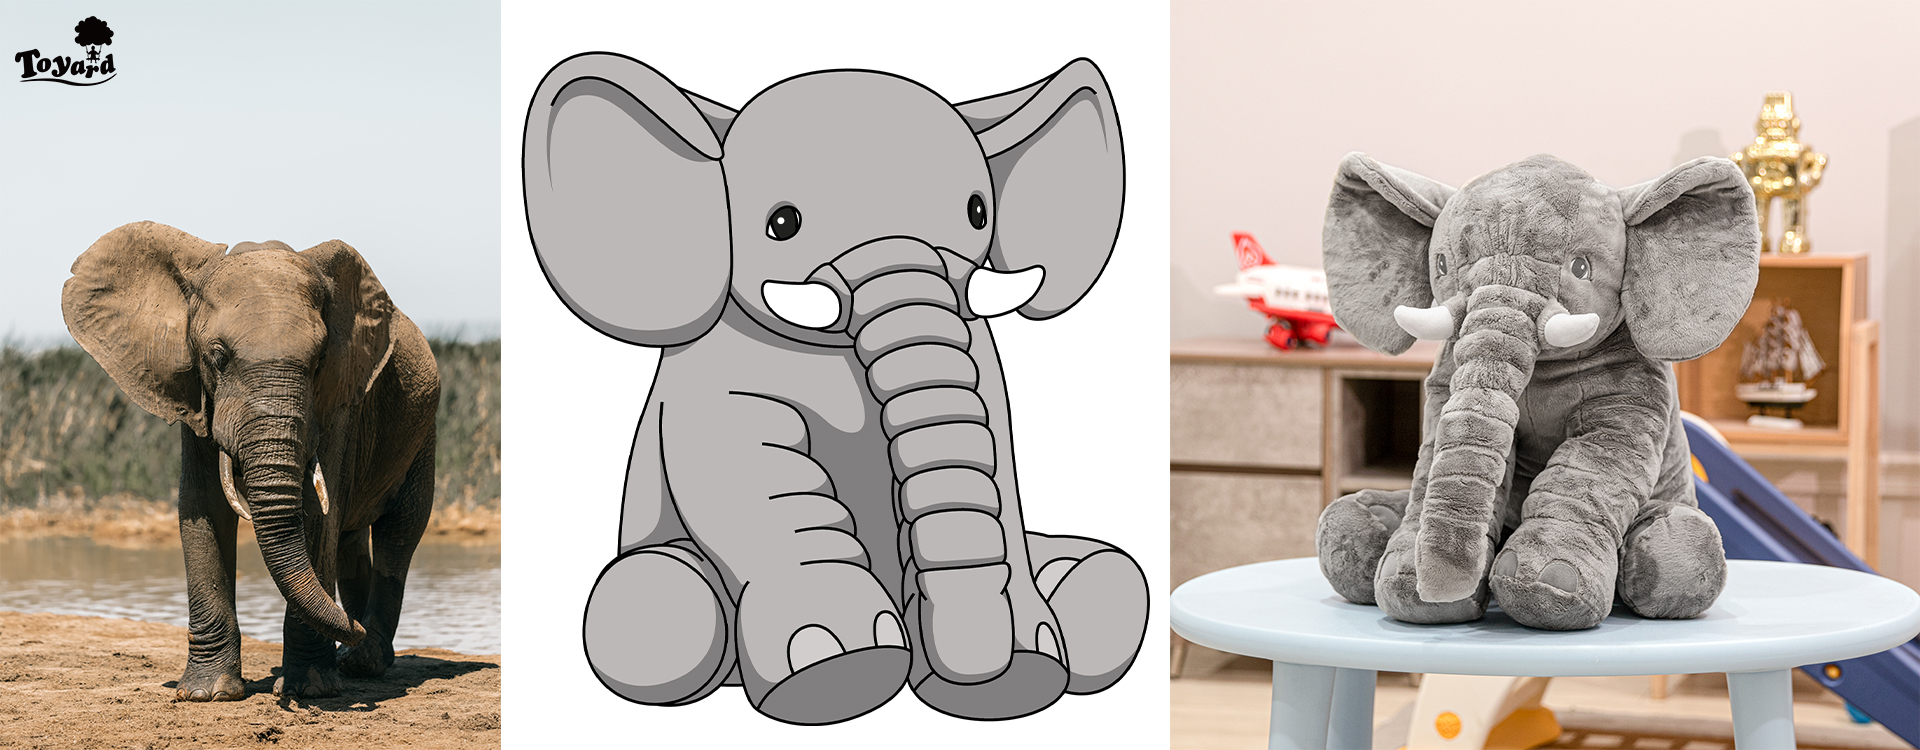 How to Manufacture Elephant Stuffed Animal